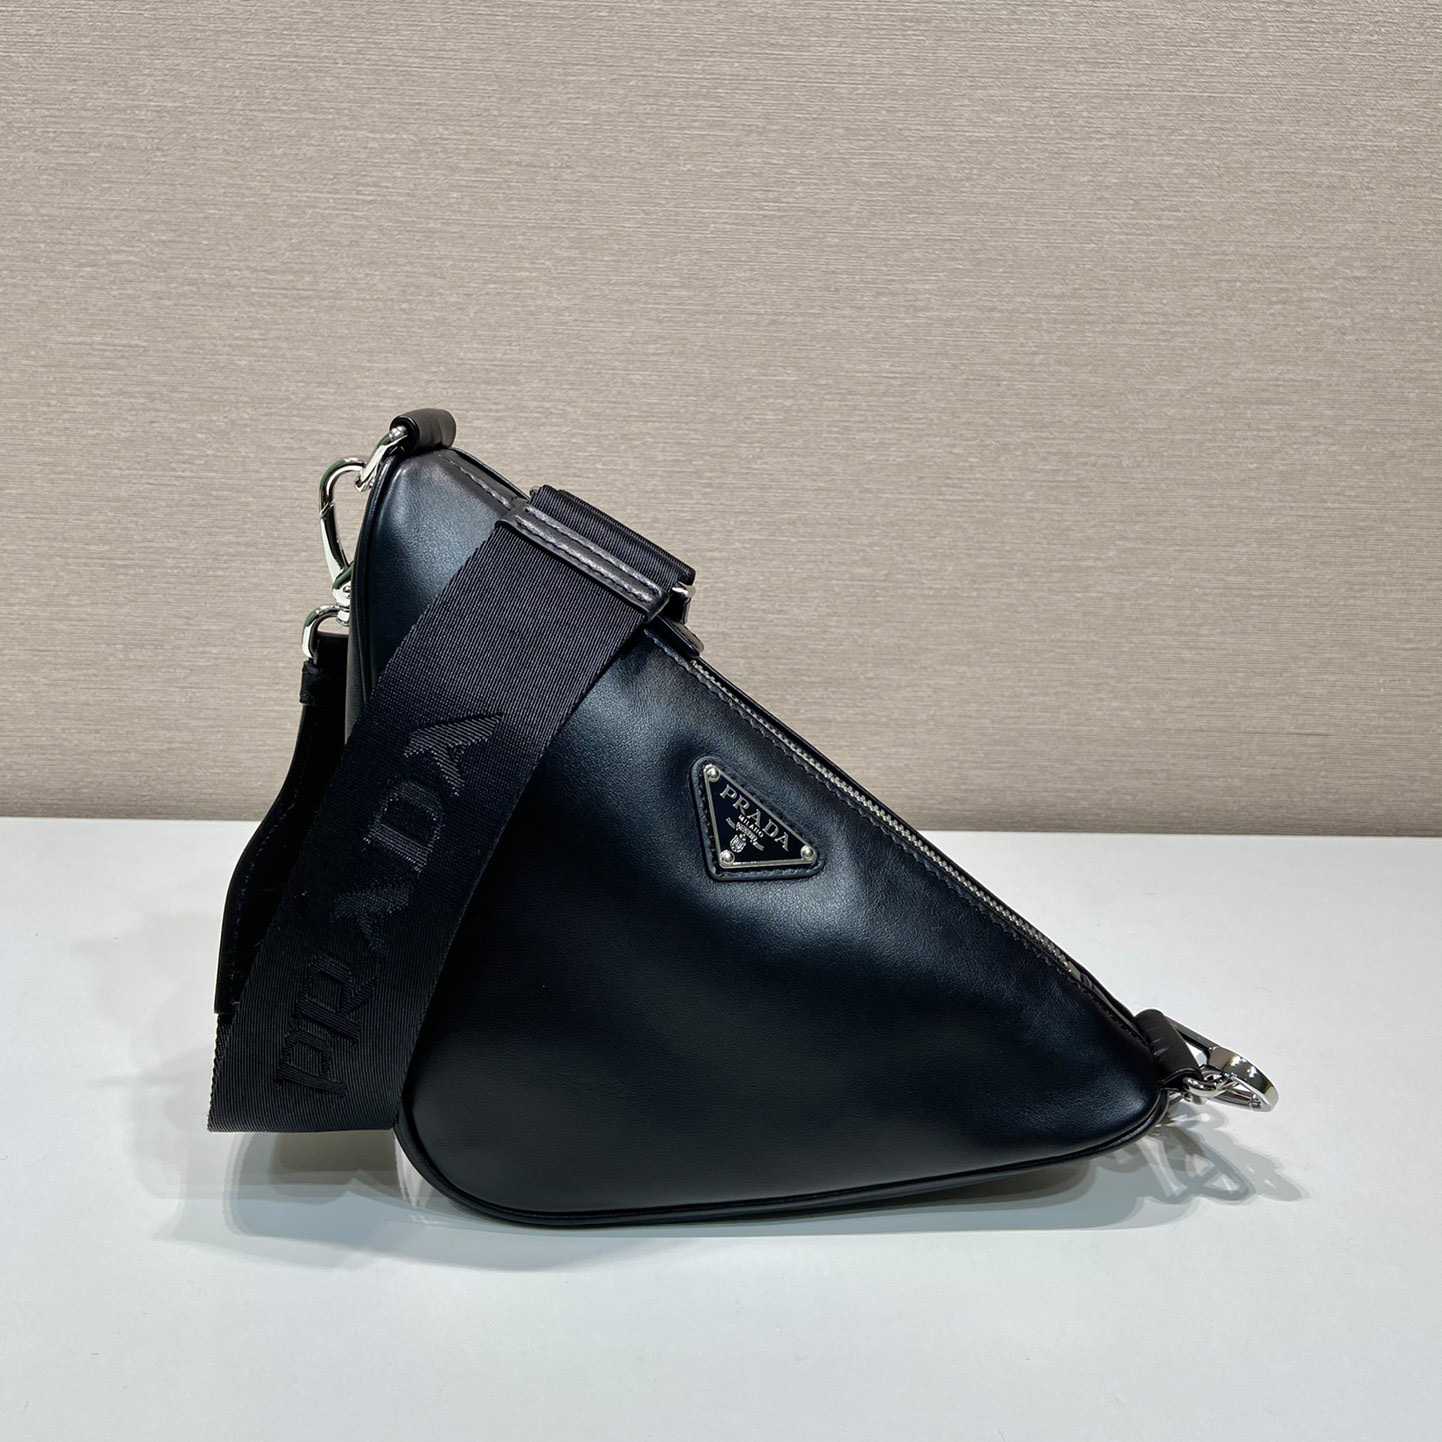 Prada Triangle Leather Bag - DesignerGu